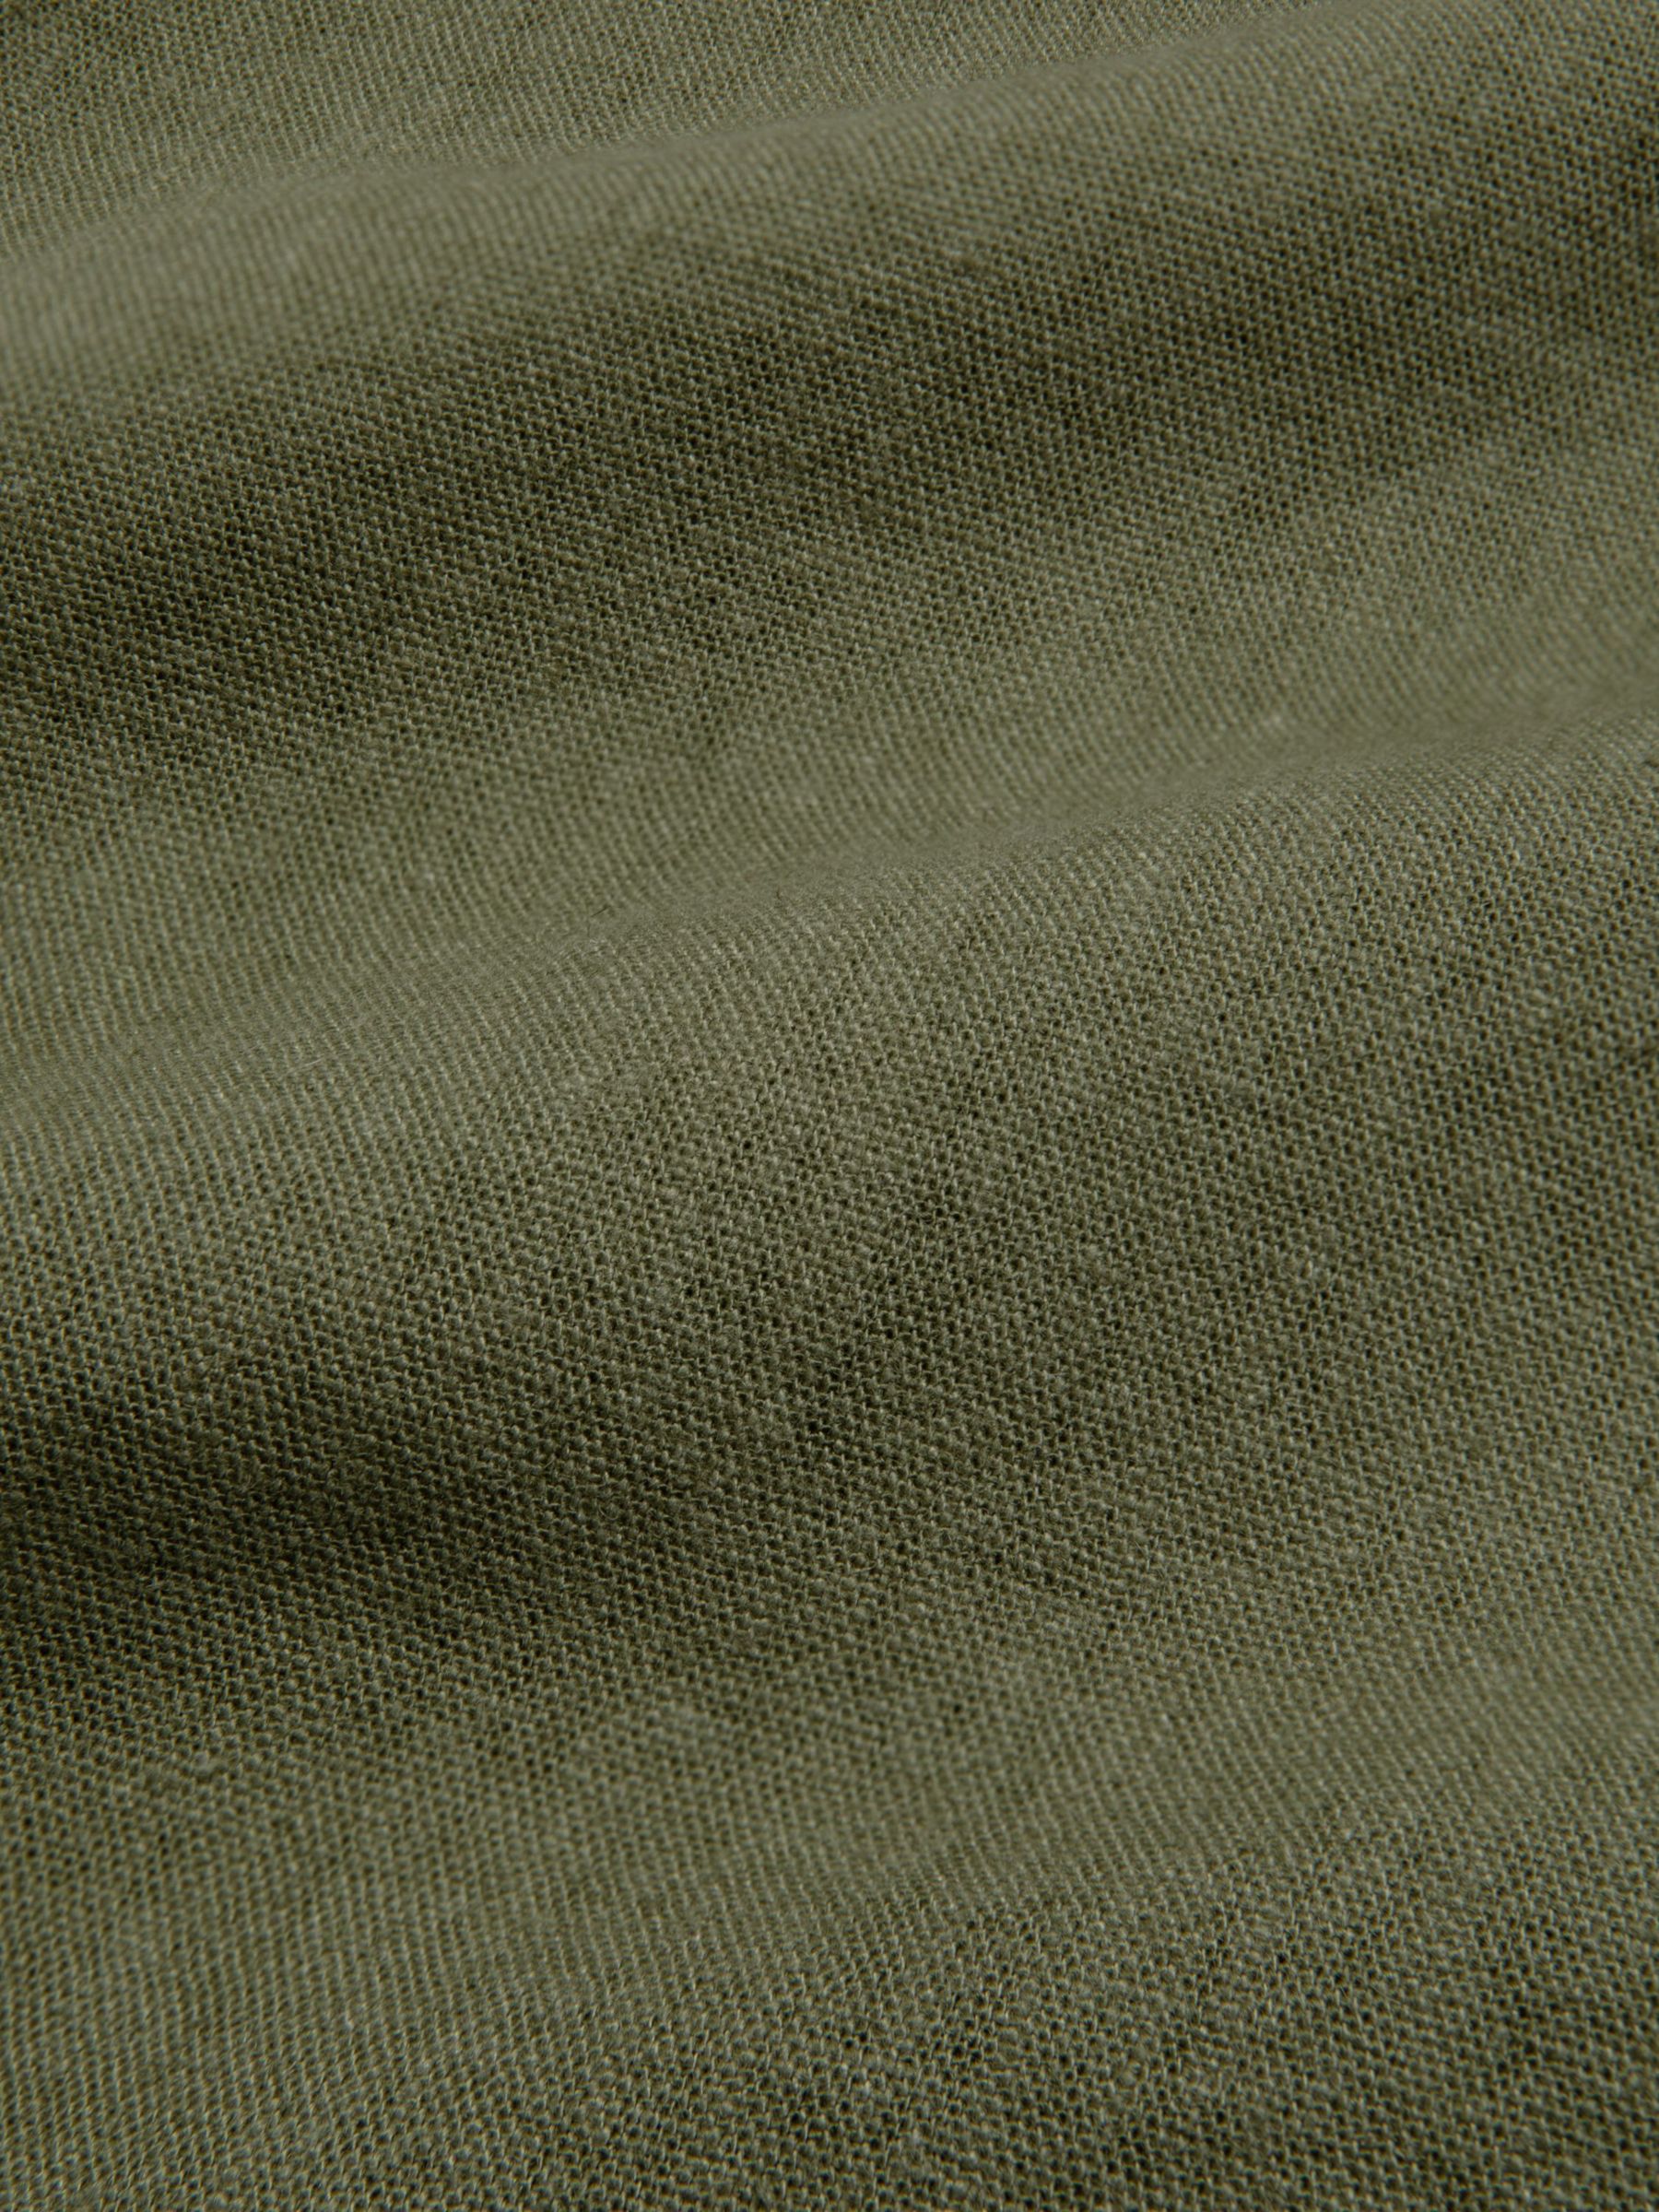 Chelsea Peers Linen Blend Short Sleeve Shirt, Khaki, L